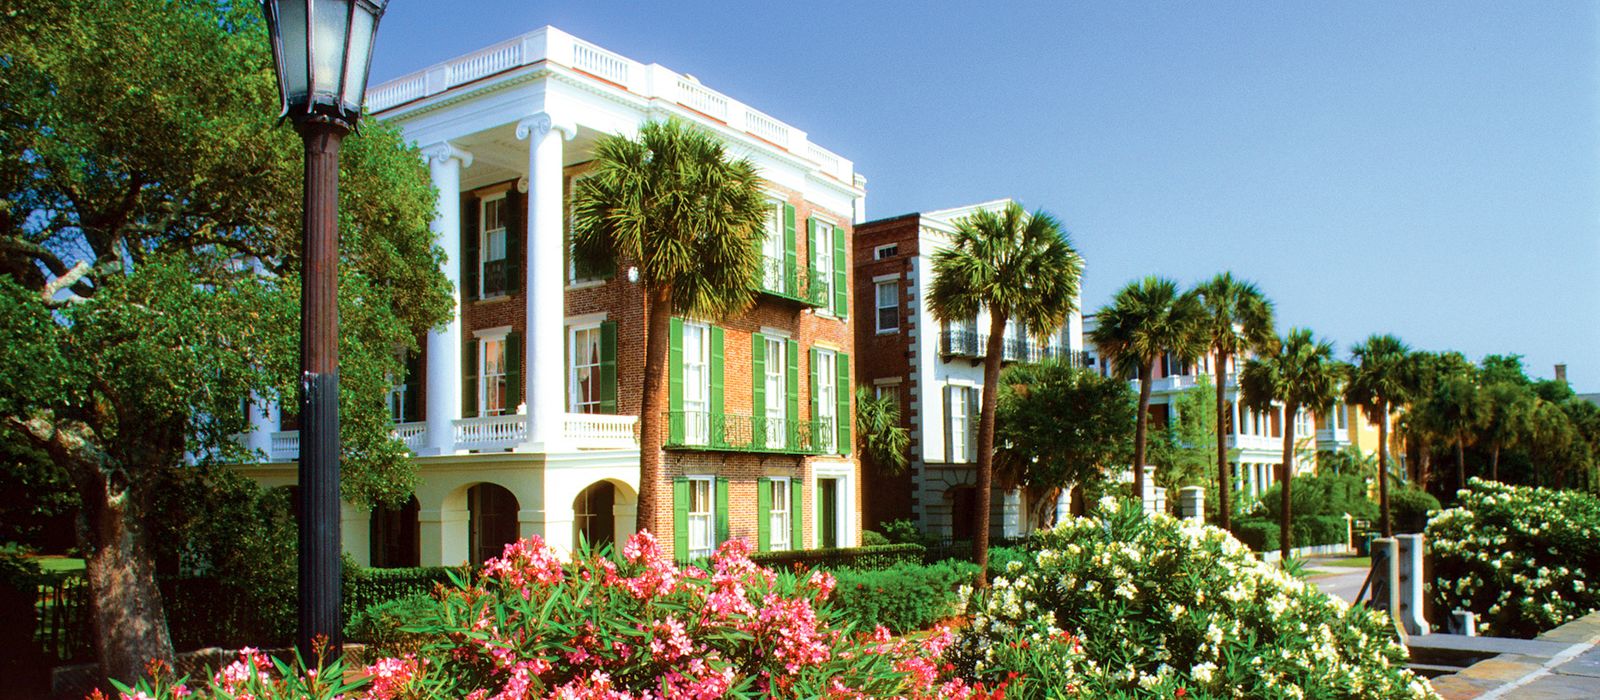 Eine Promenade in Charleston, South Carolina